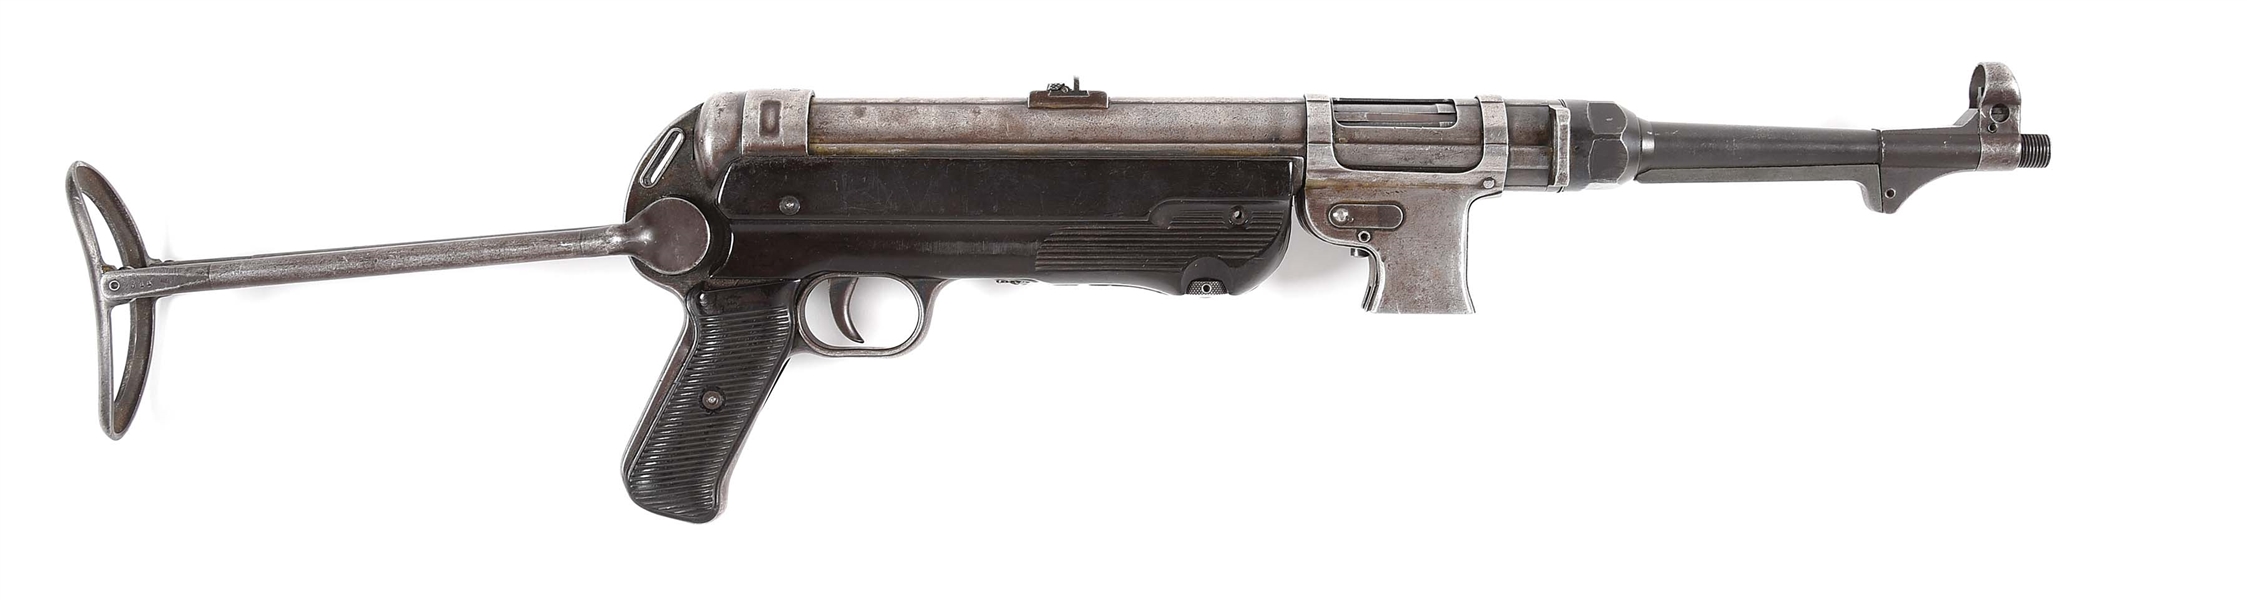 (N) EXCEPTIONALLY EARLY THREE DIGIT SERIAL NUMBER FLAT MAG HOUSING GERMAN WORLD WAR II MP-40 MACHINE GUN (PRE-86 DEALER SAMPLE).